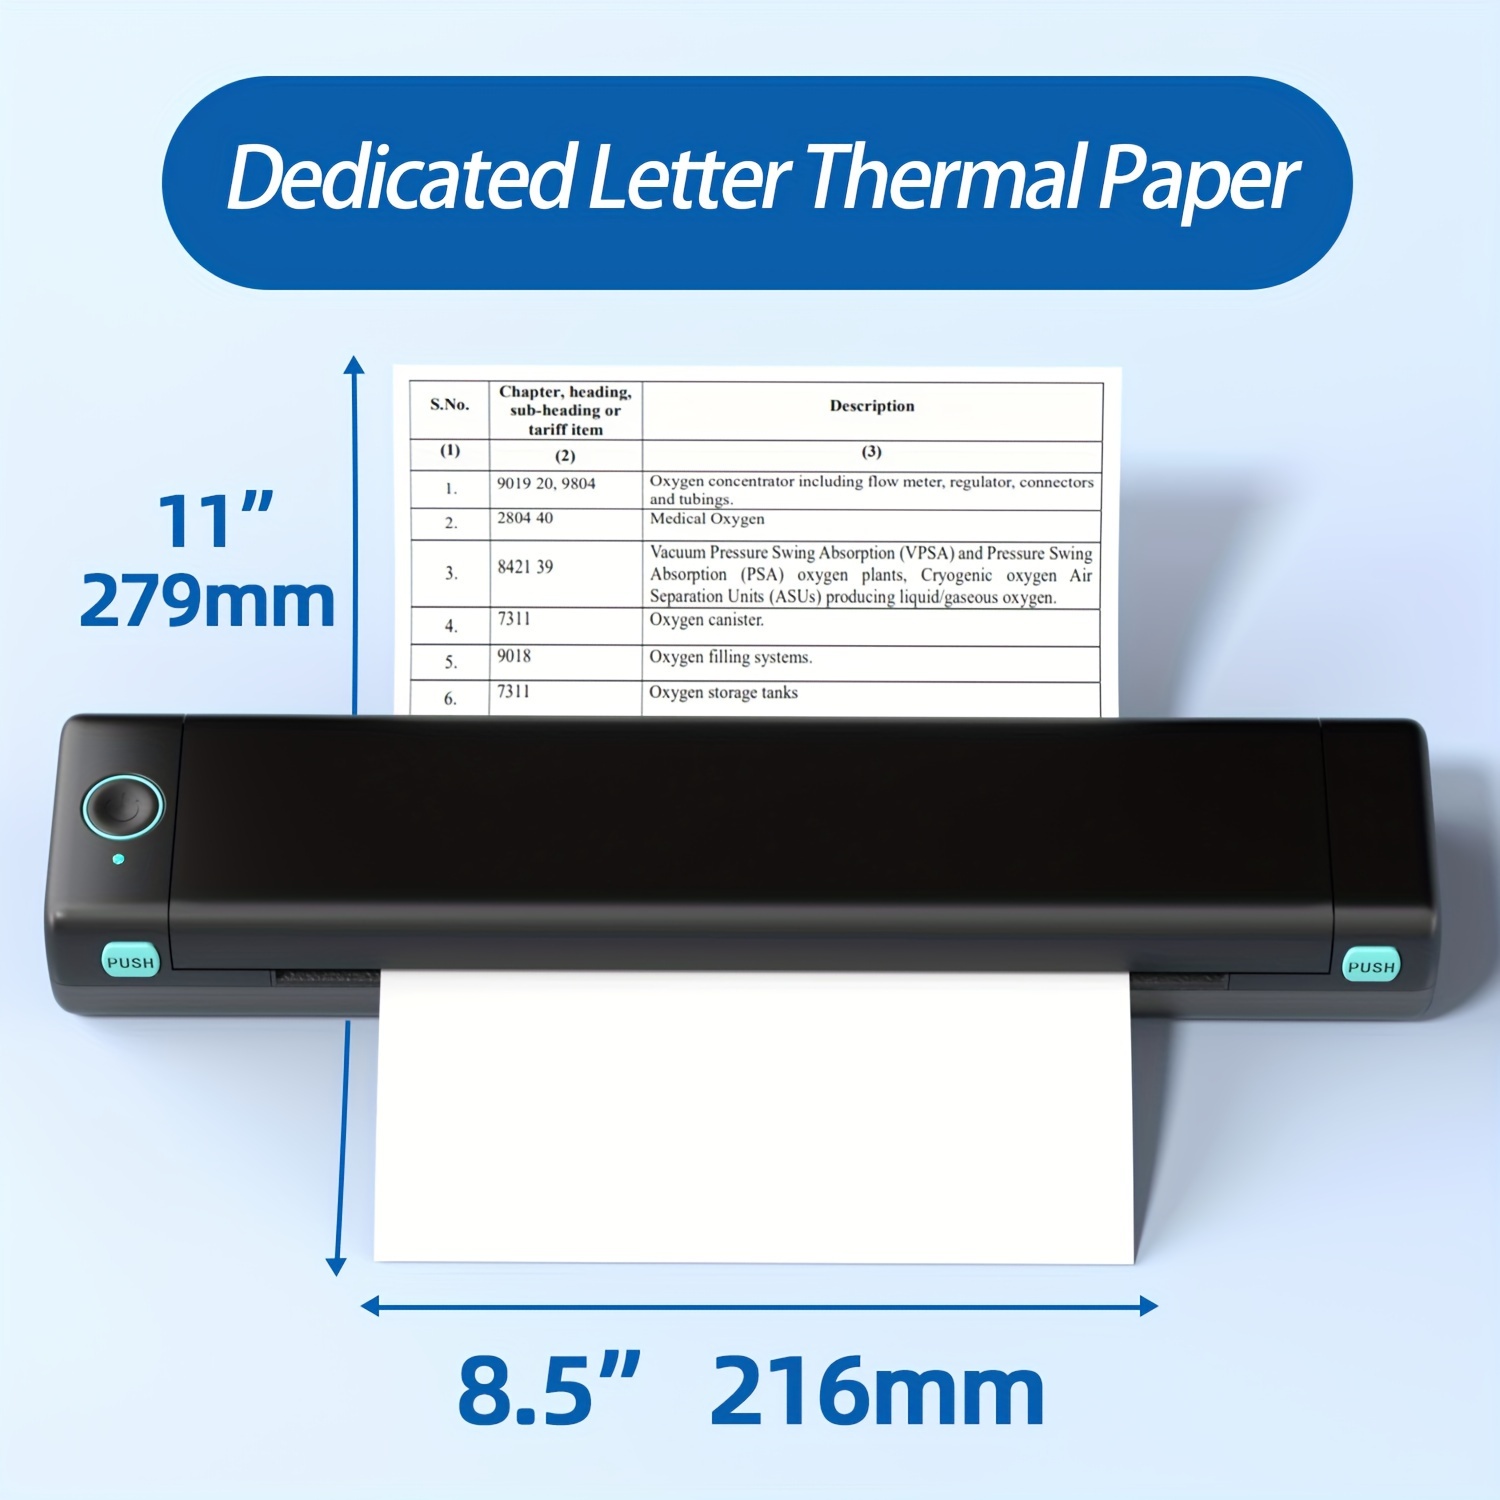 Itari Papel para impresora térmica de 8.5 x 11 pulgadas, carta de EE. UU.  para impresora portátil M08F, papel térmico multiusos de 100 hojas